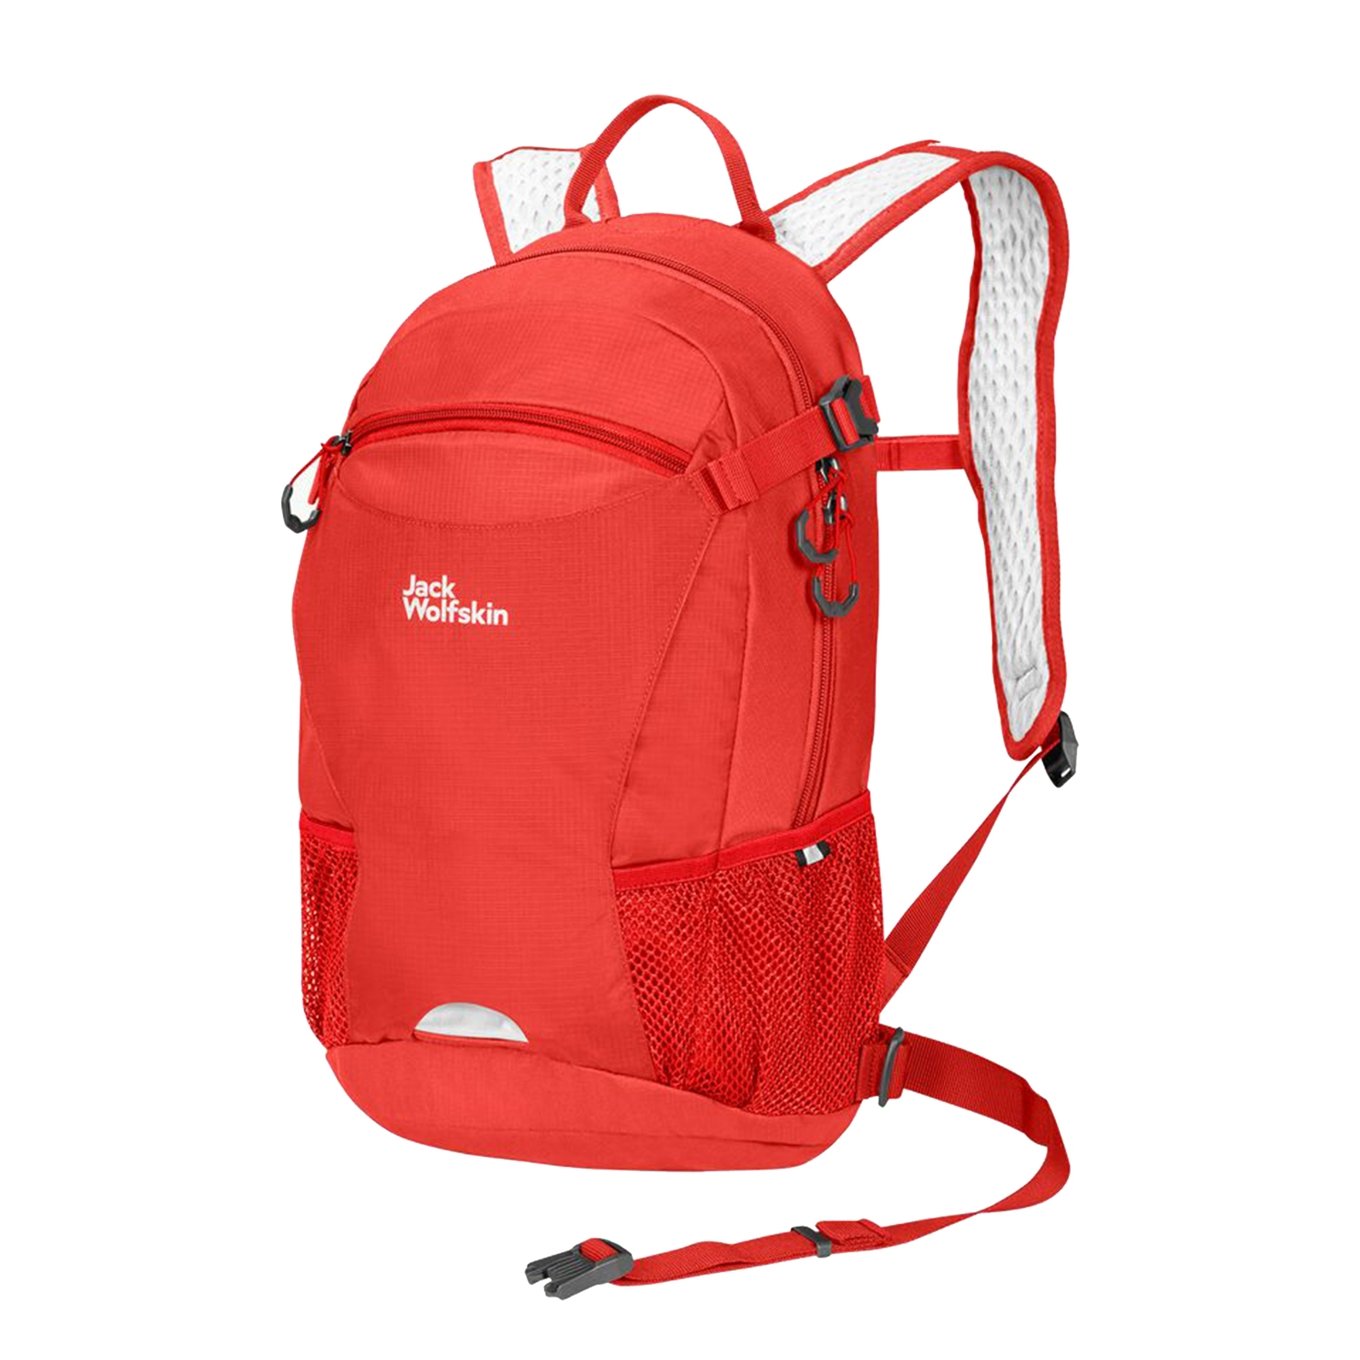 aanval Rode datum Etna Jack Wolfskin Velocity 12 Hiking Pack tango orange | Travelbags.nl